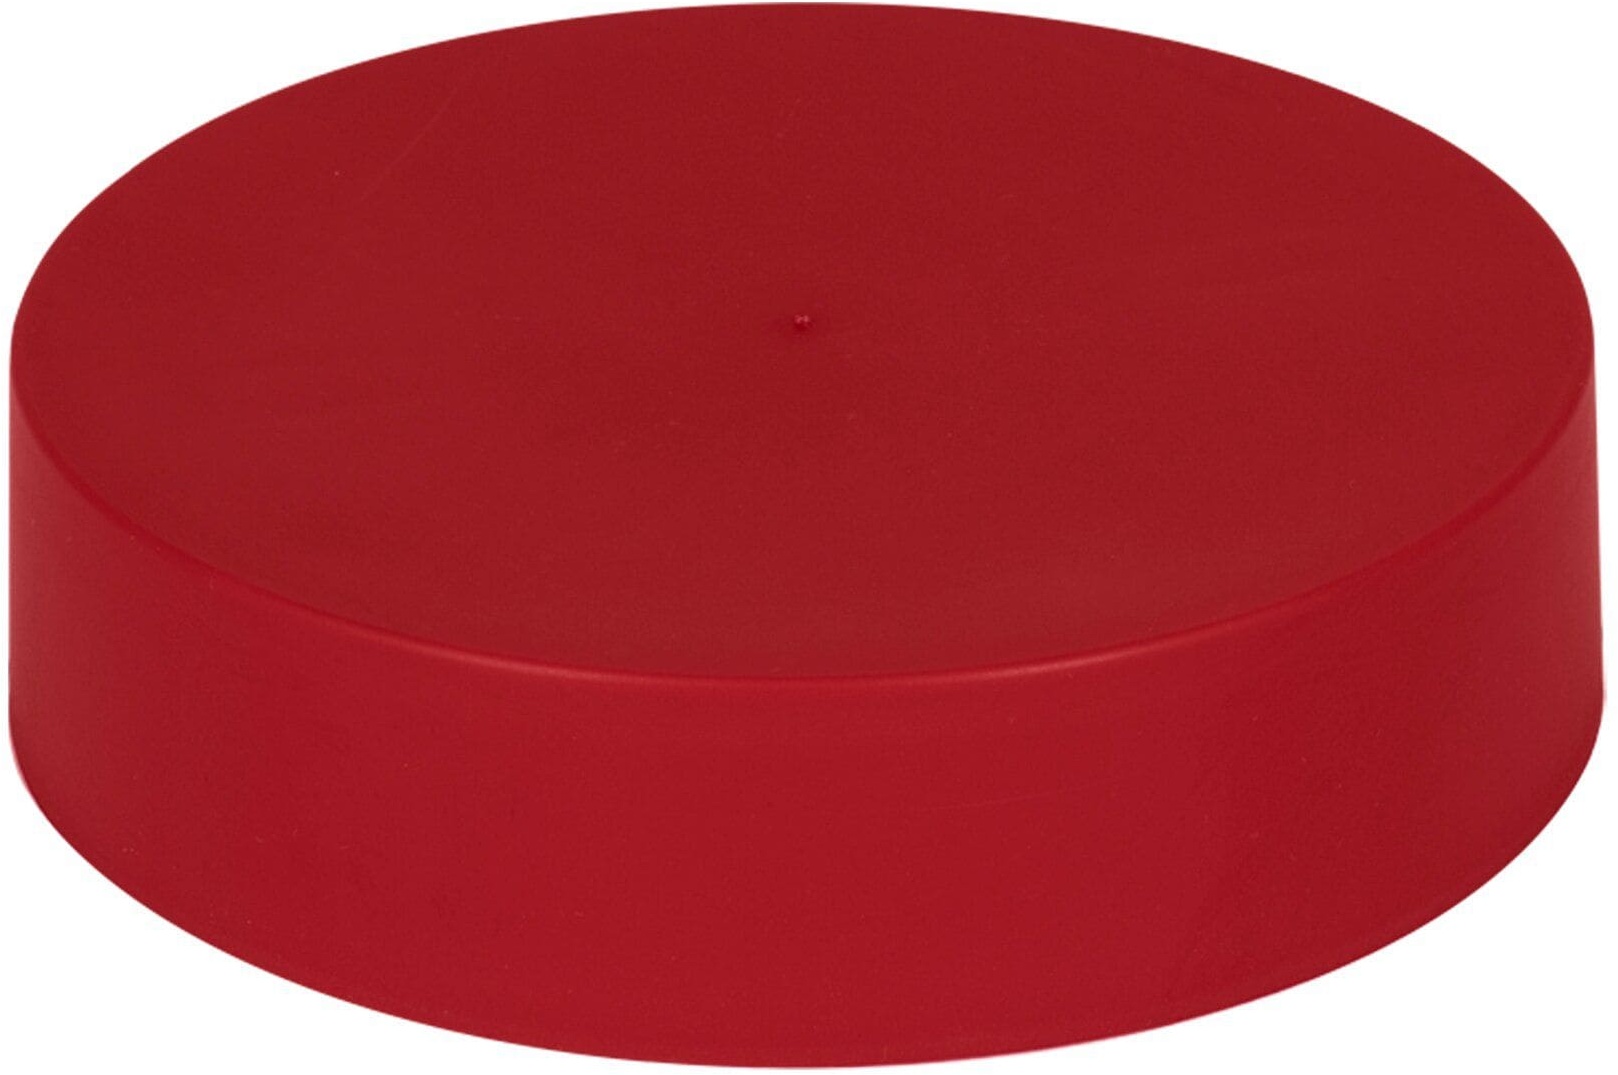 BAILEY 139723 Deckendose Ø120mm, SmartCup, Kunststoff rot